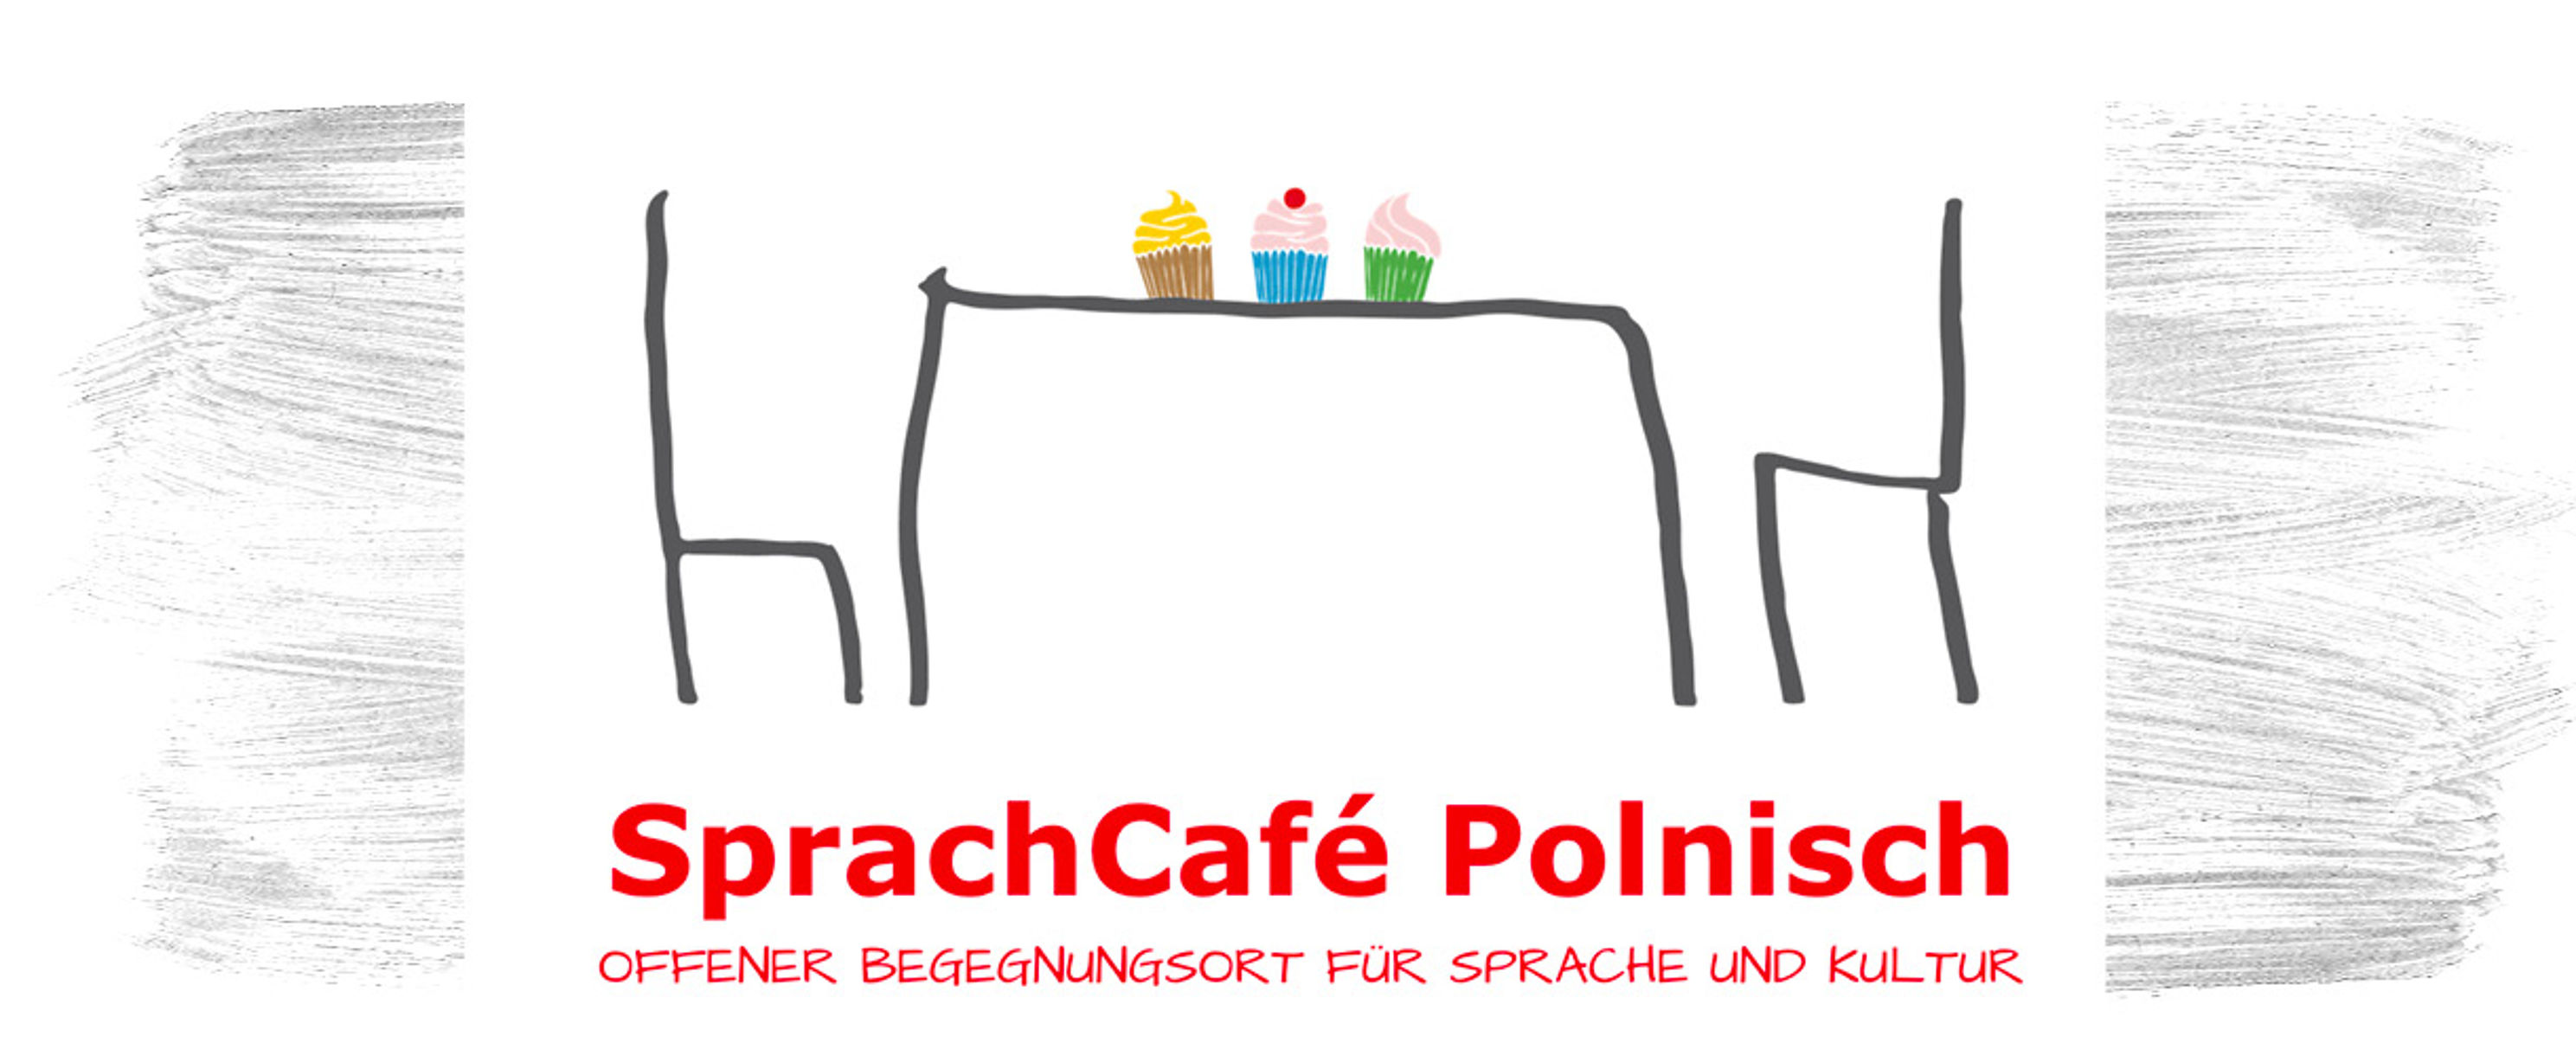 SprachCafé Polnisch in Berlin-Pankow